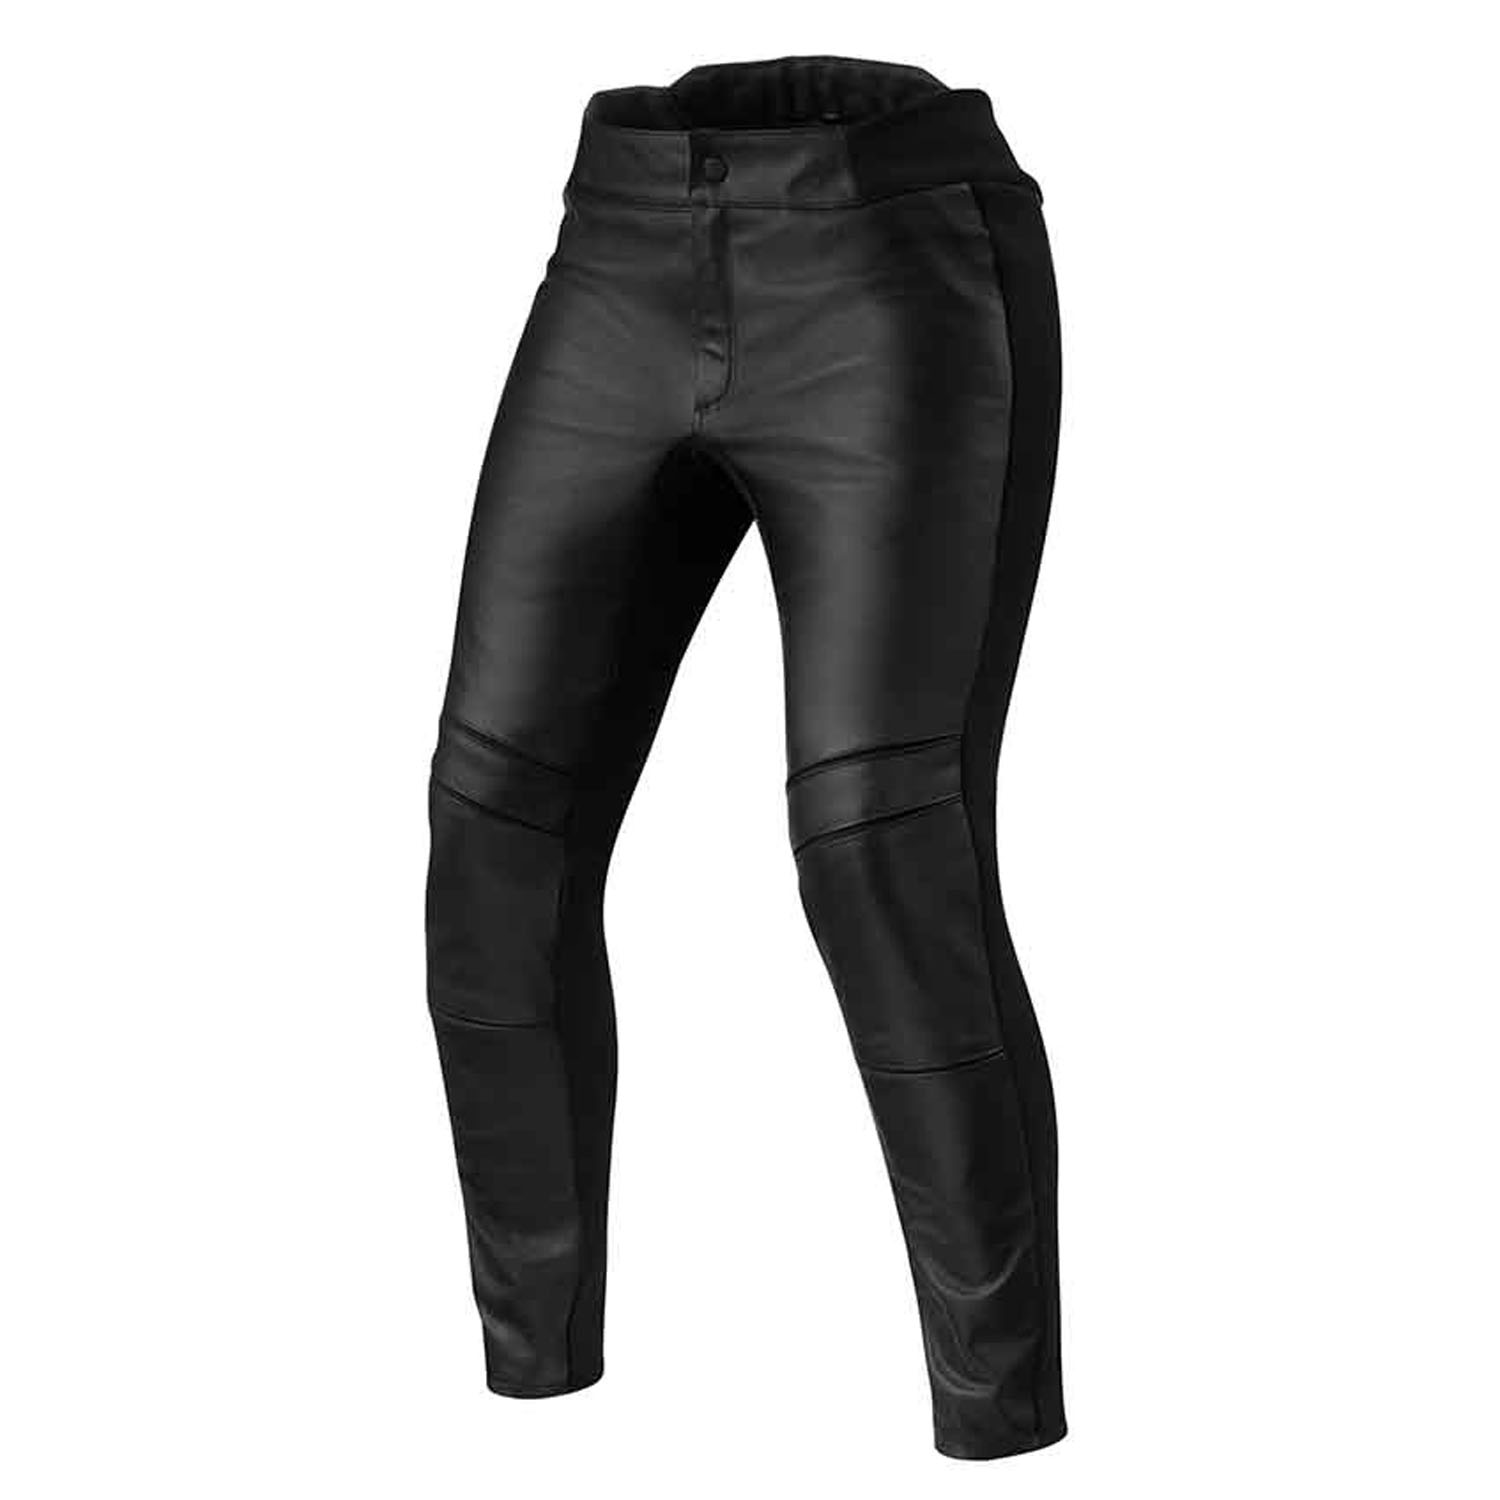 Image of REV'IT! Maci Ladies Black Short Motorcycle Pants Size 44 ID 8700001359160